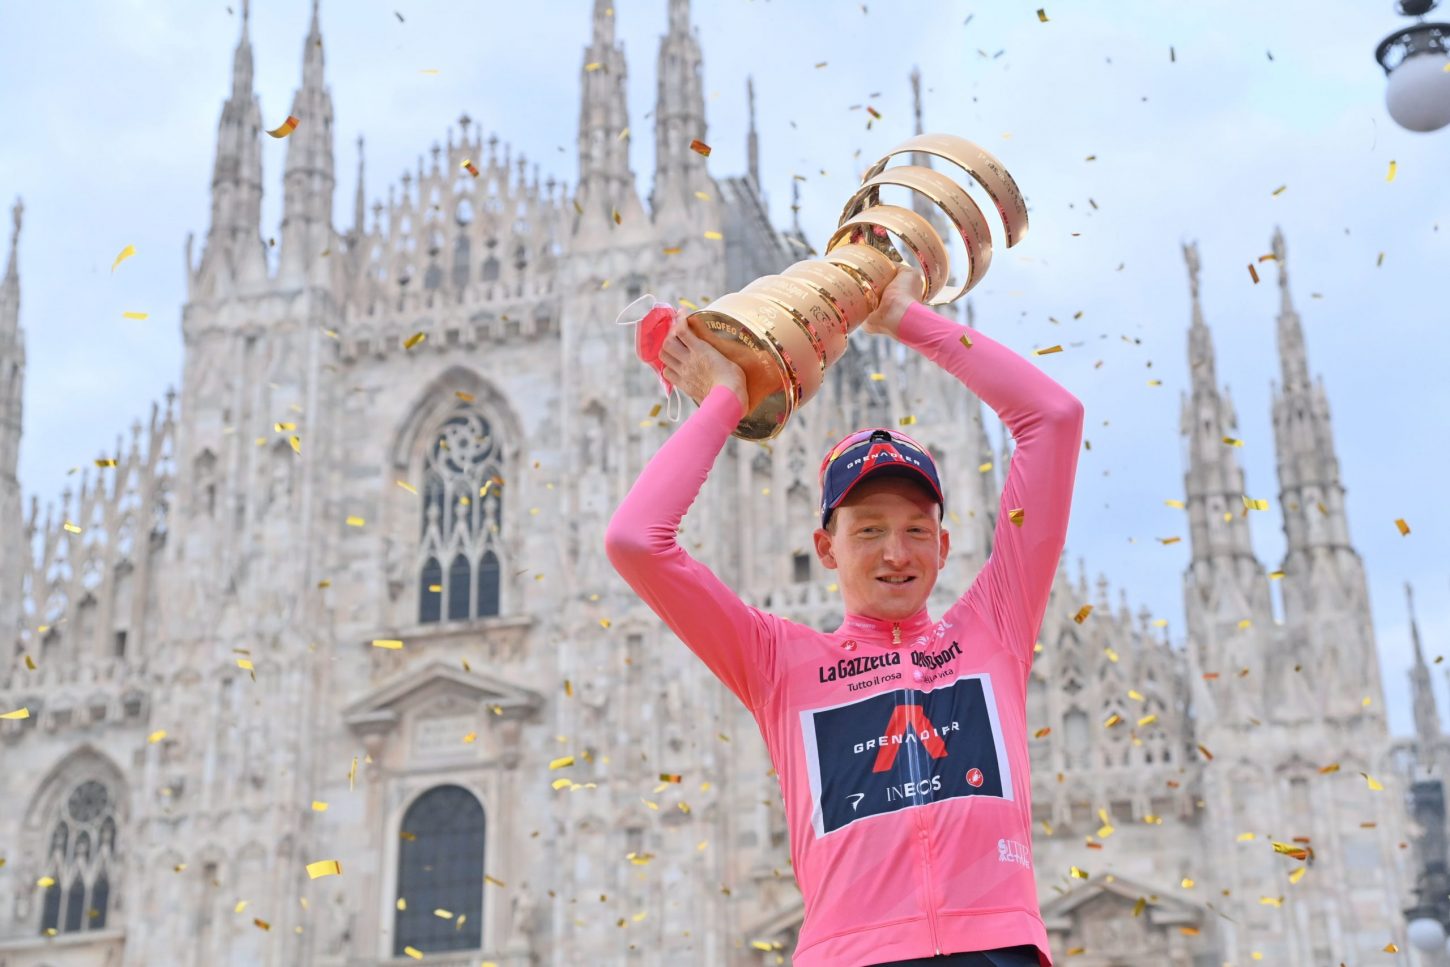 Tao Geoghegan Hart (Ineos Grenadiers) memenangkan Giro d'Italia 2020 tanpa pernah mengenakan maglia  rosa sepanjang lomba. (Foto: Istimewa)